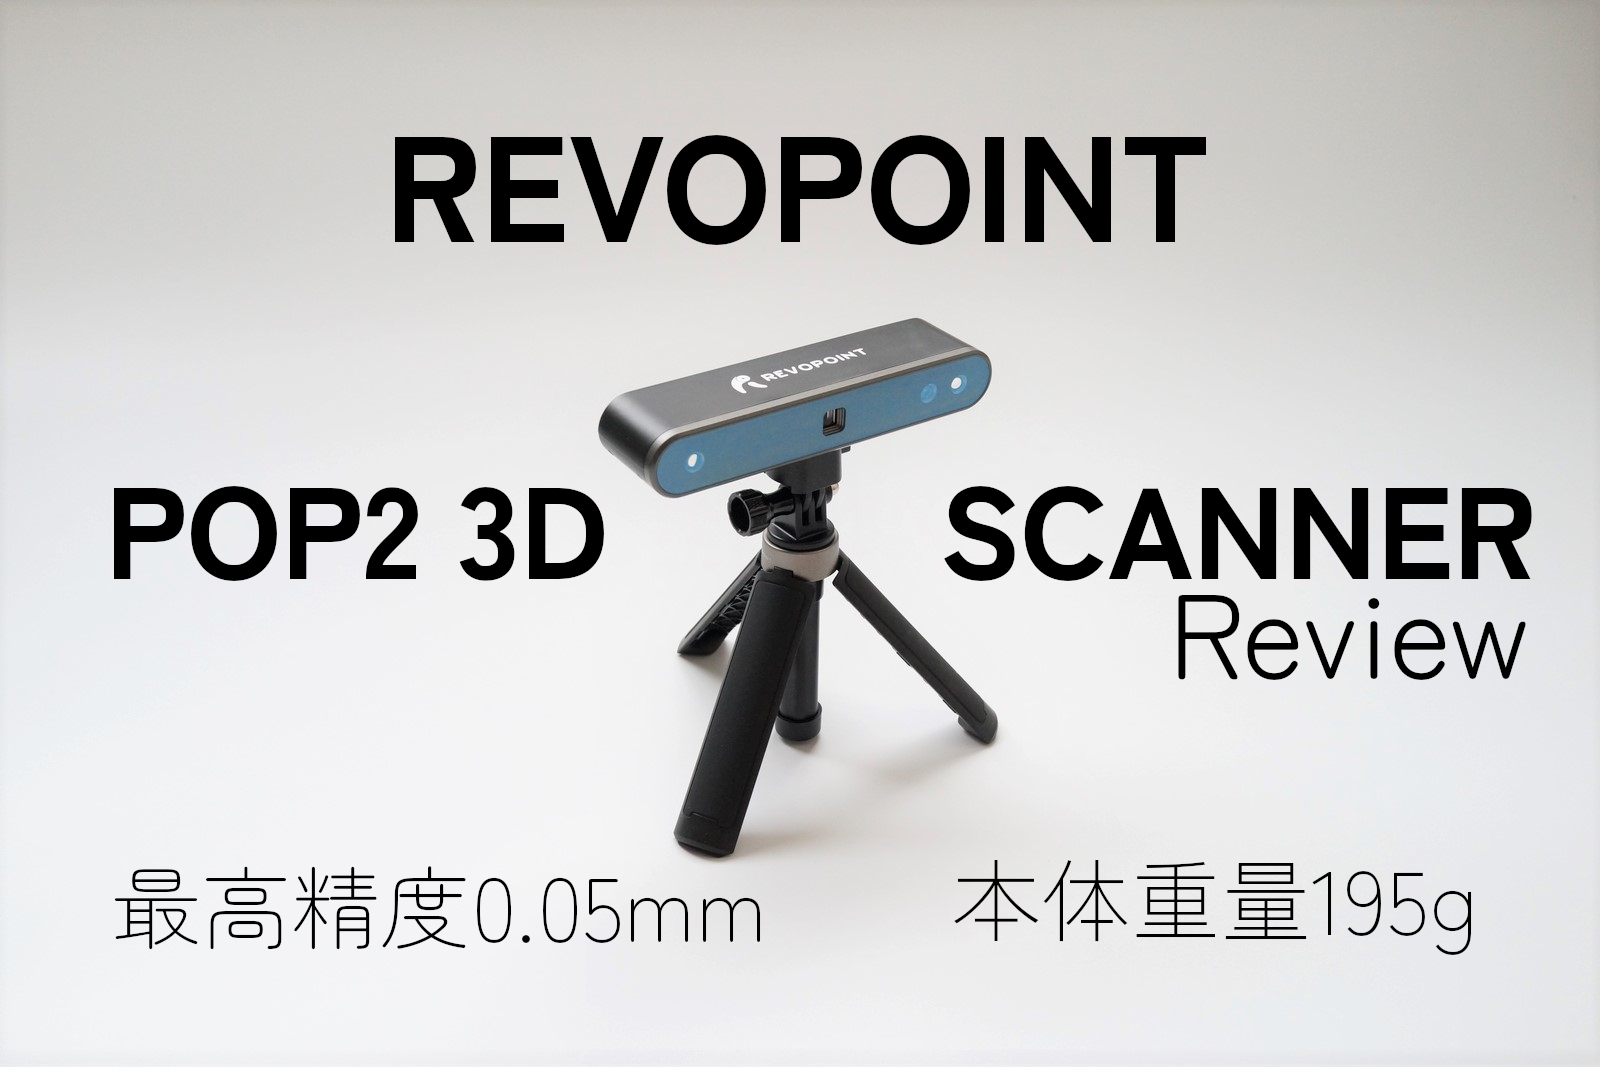 REVOPOINT POP 2 レビュー 個人利用におすすめの低価格3Dスキャナー 